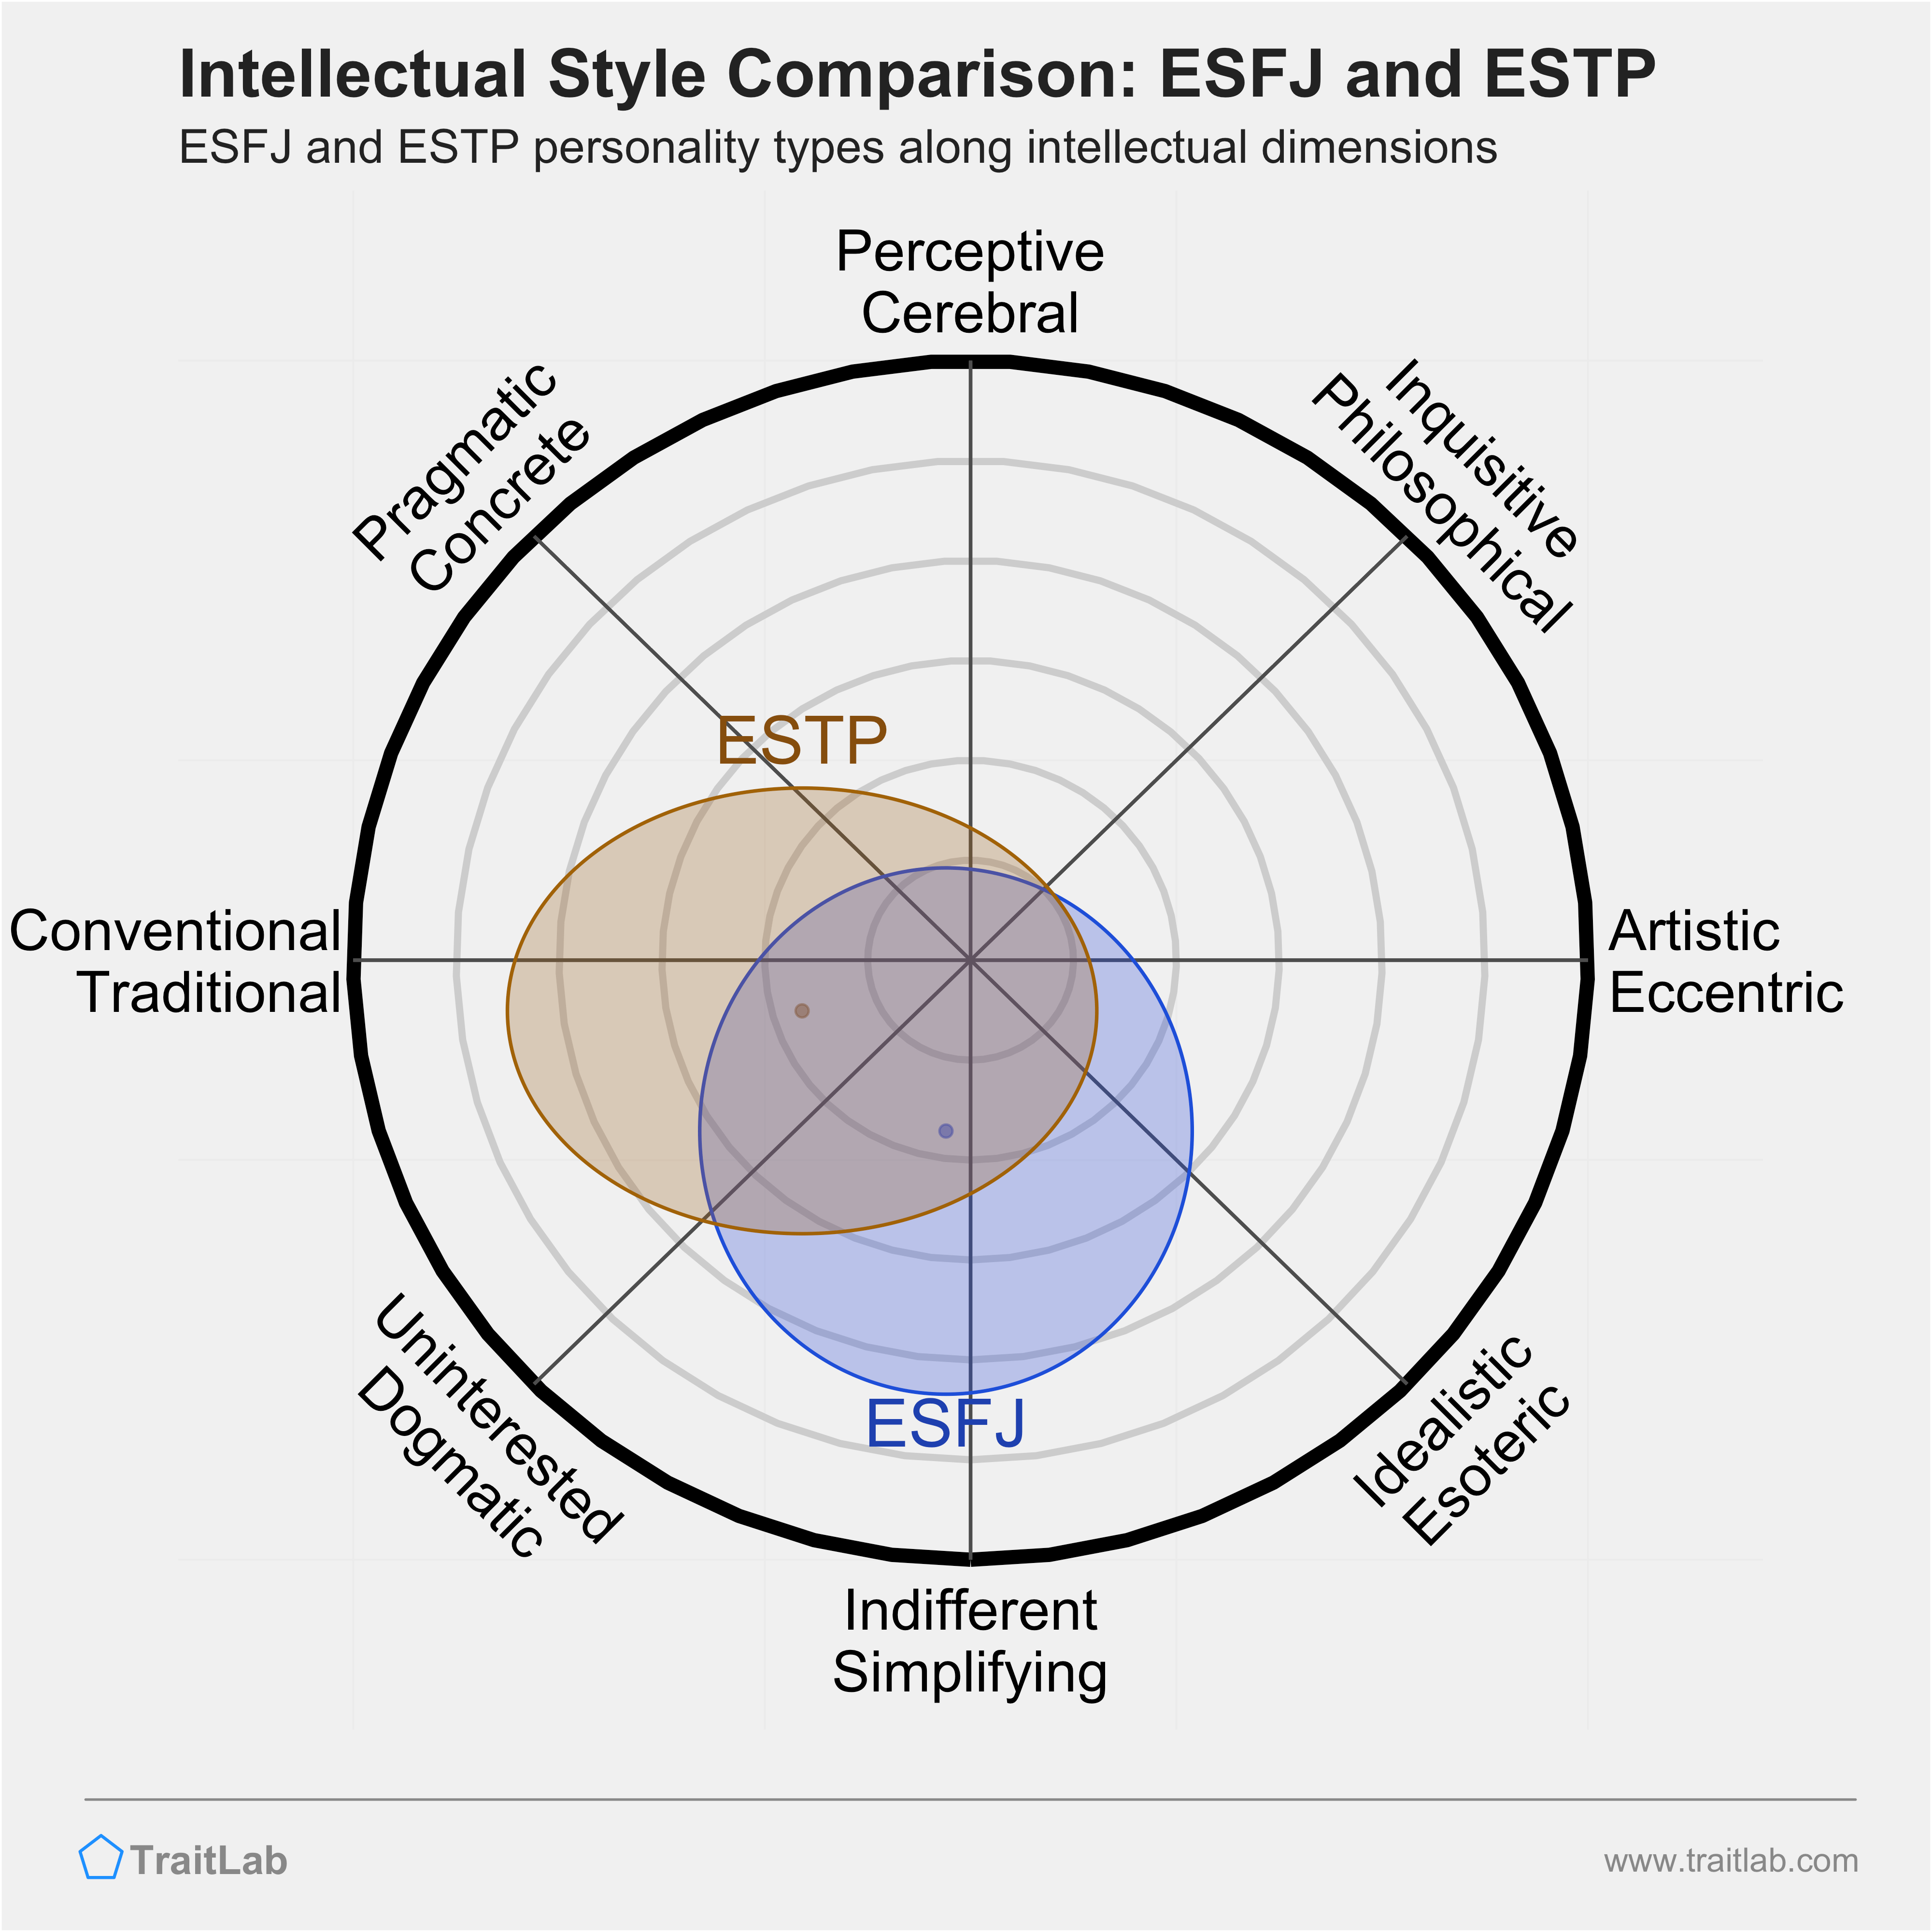 ESFJ and ESTP comparison across intellectual dimensions